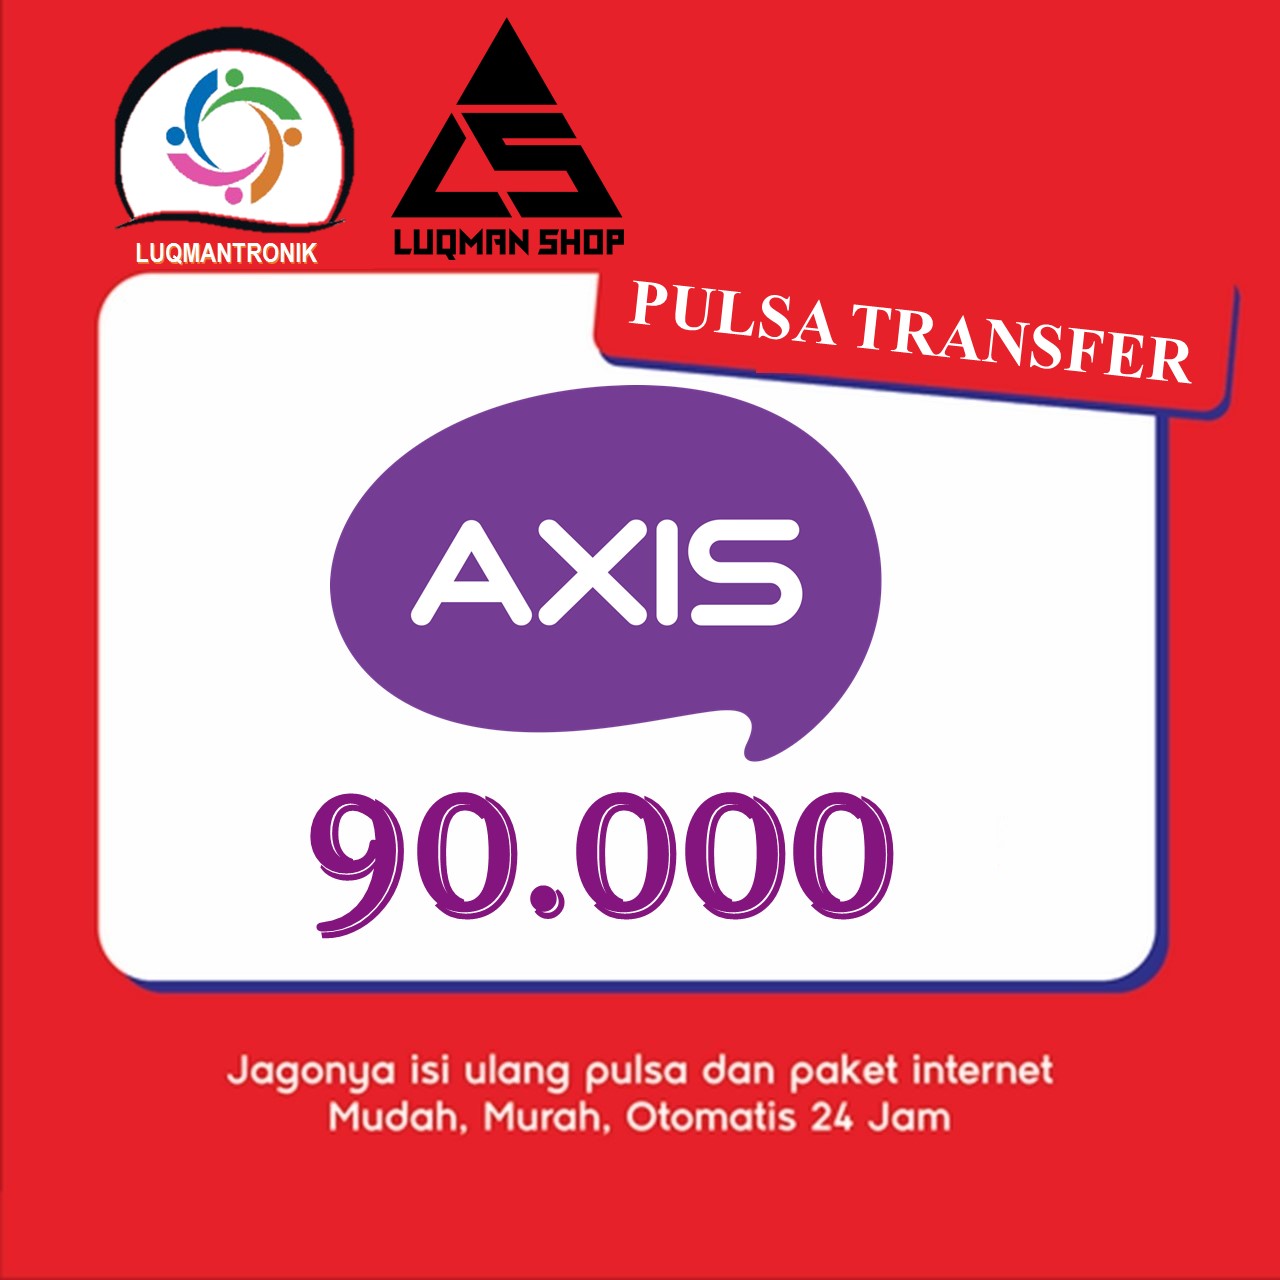 PULSA TRANSFER AXIS - PULSA TRANSFER AXIS 90.000